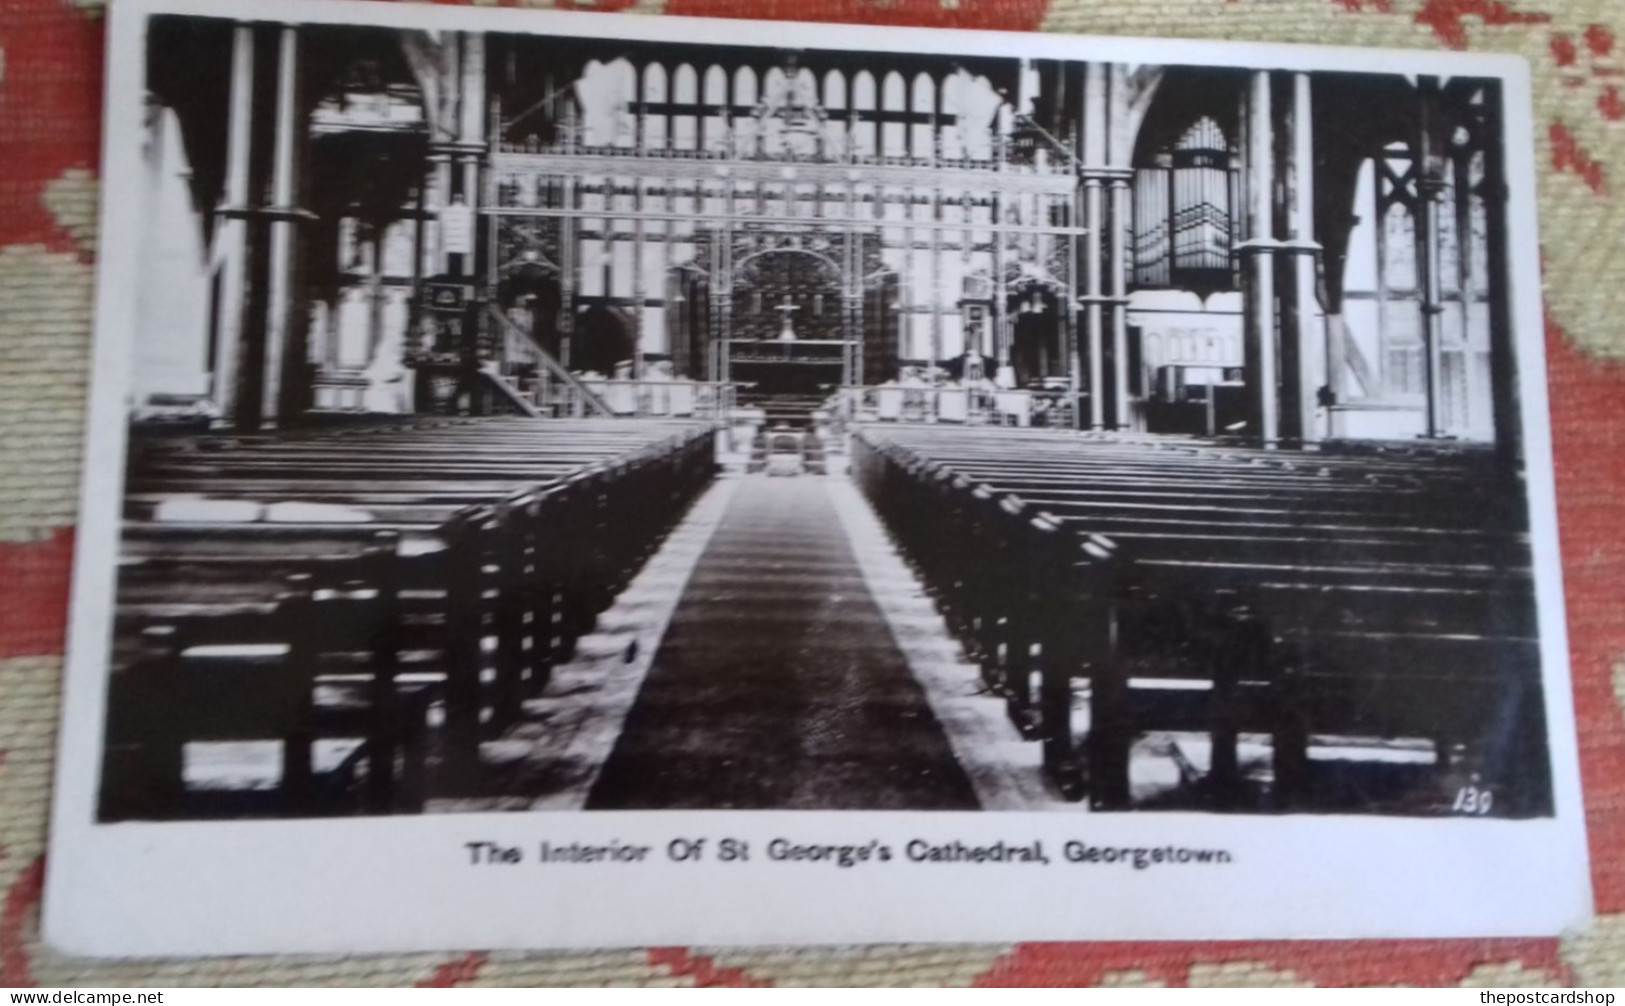 British Guiana Guyana Demerara GEORGETOWN St. George's Cathedral INTERIOR UNUSED - Guyana (antigua Guayana Británica)